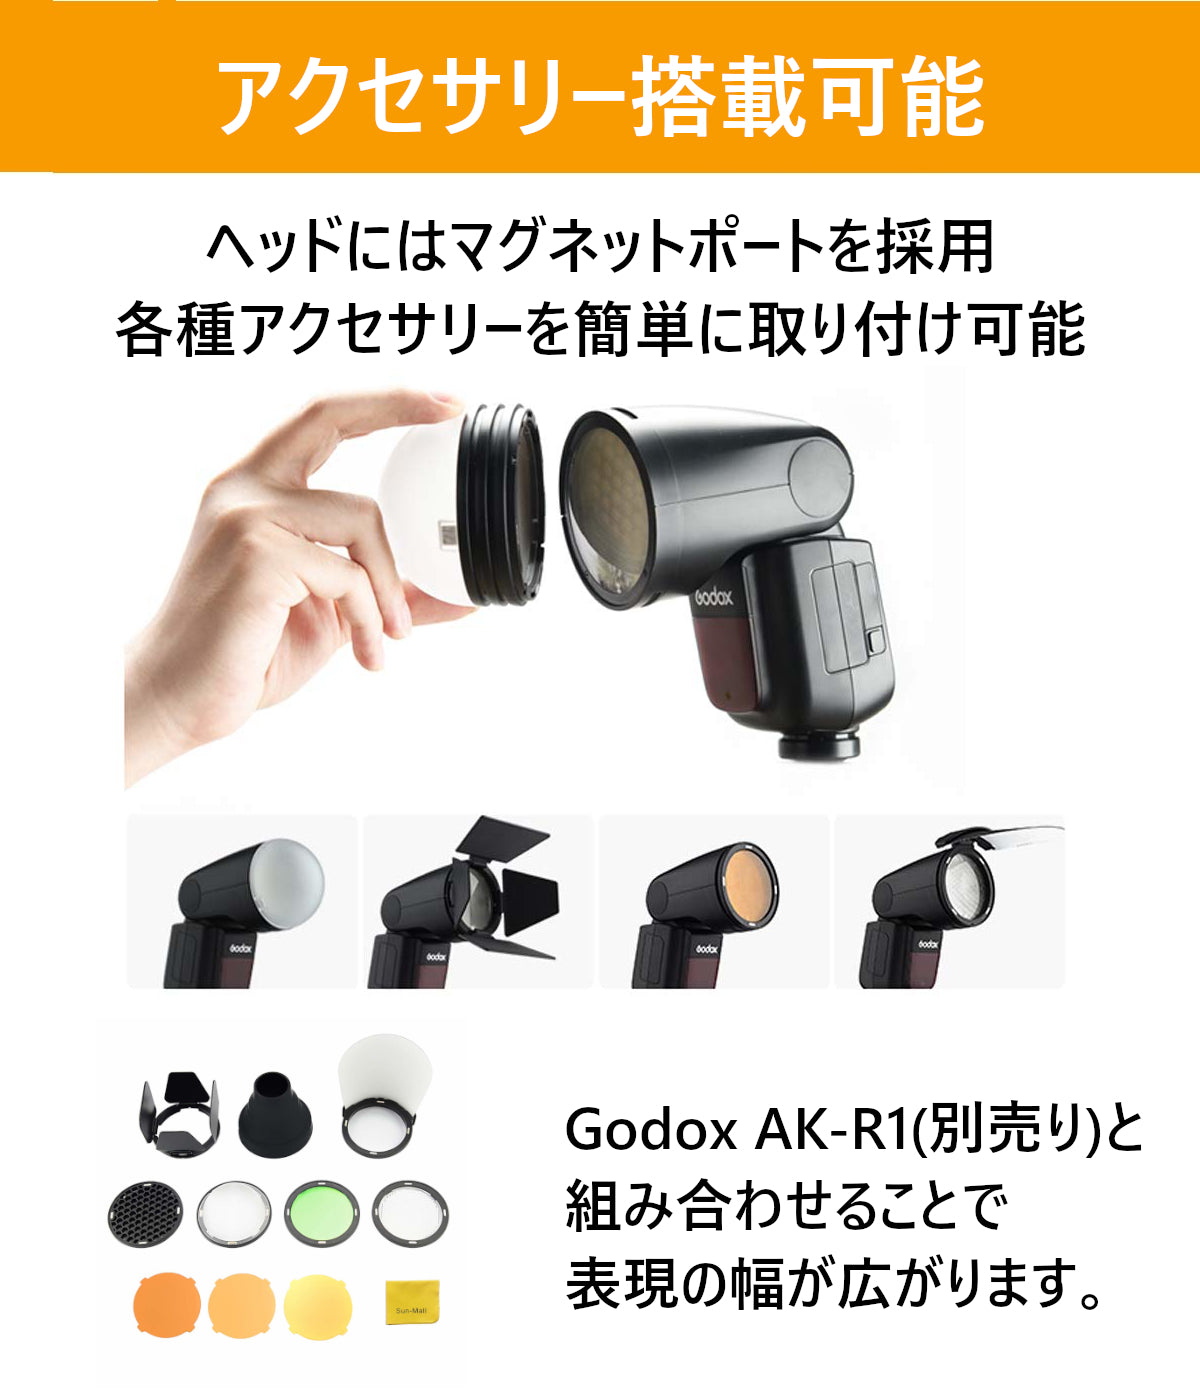 Godox V1-N 充実サポート V1N V1 Nikon対応 PSE 技適認証 フラッシュ ストロボ 76WS 2.4G TTL ラウンドヘッド 1/8000s HSS